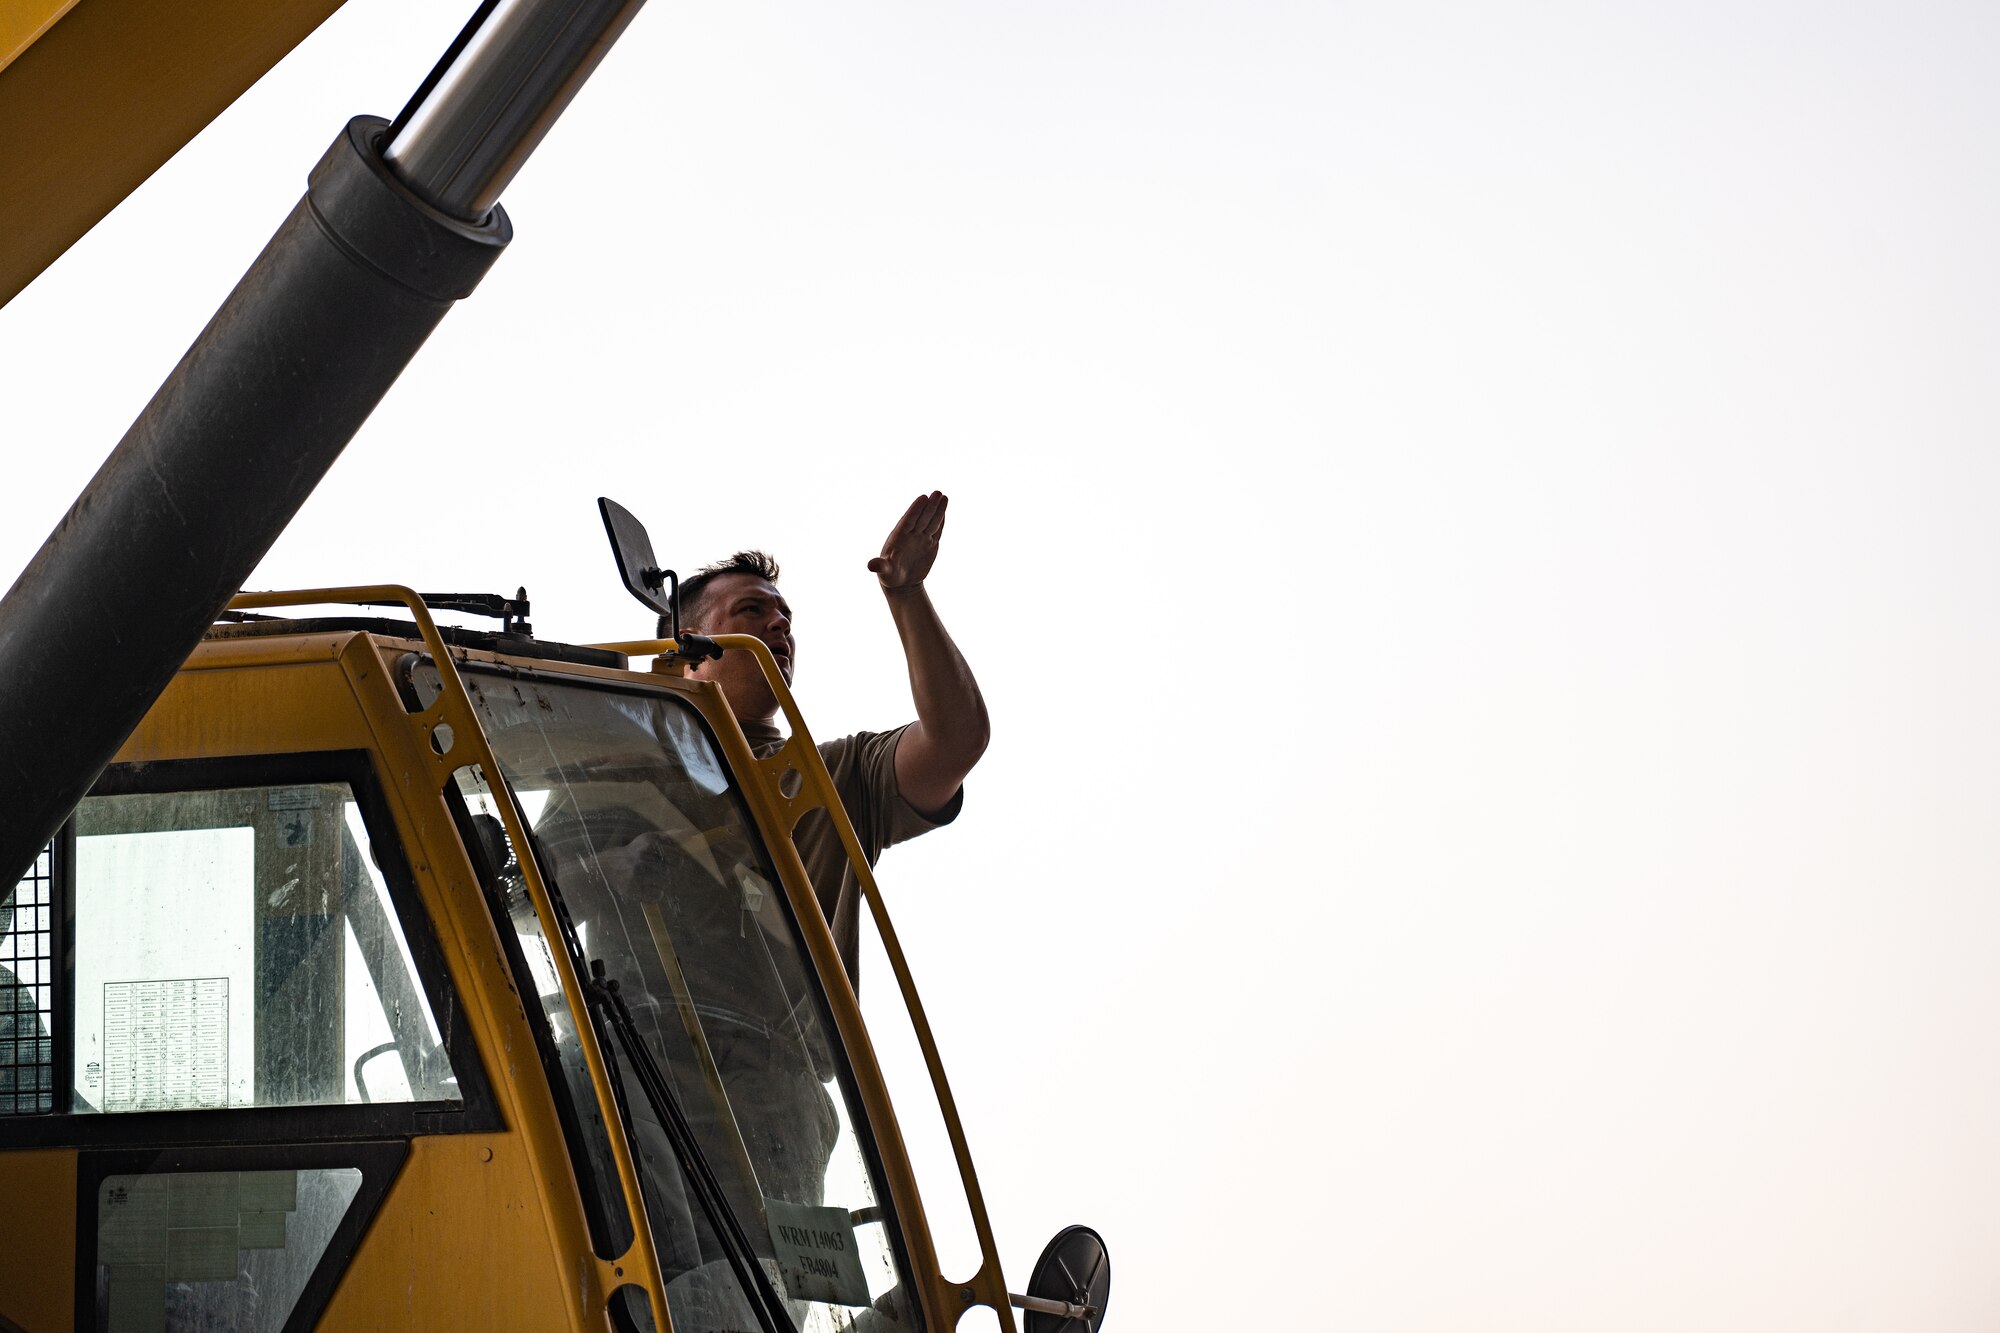 Airman operating a crane